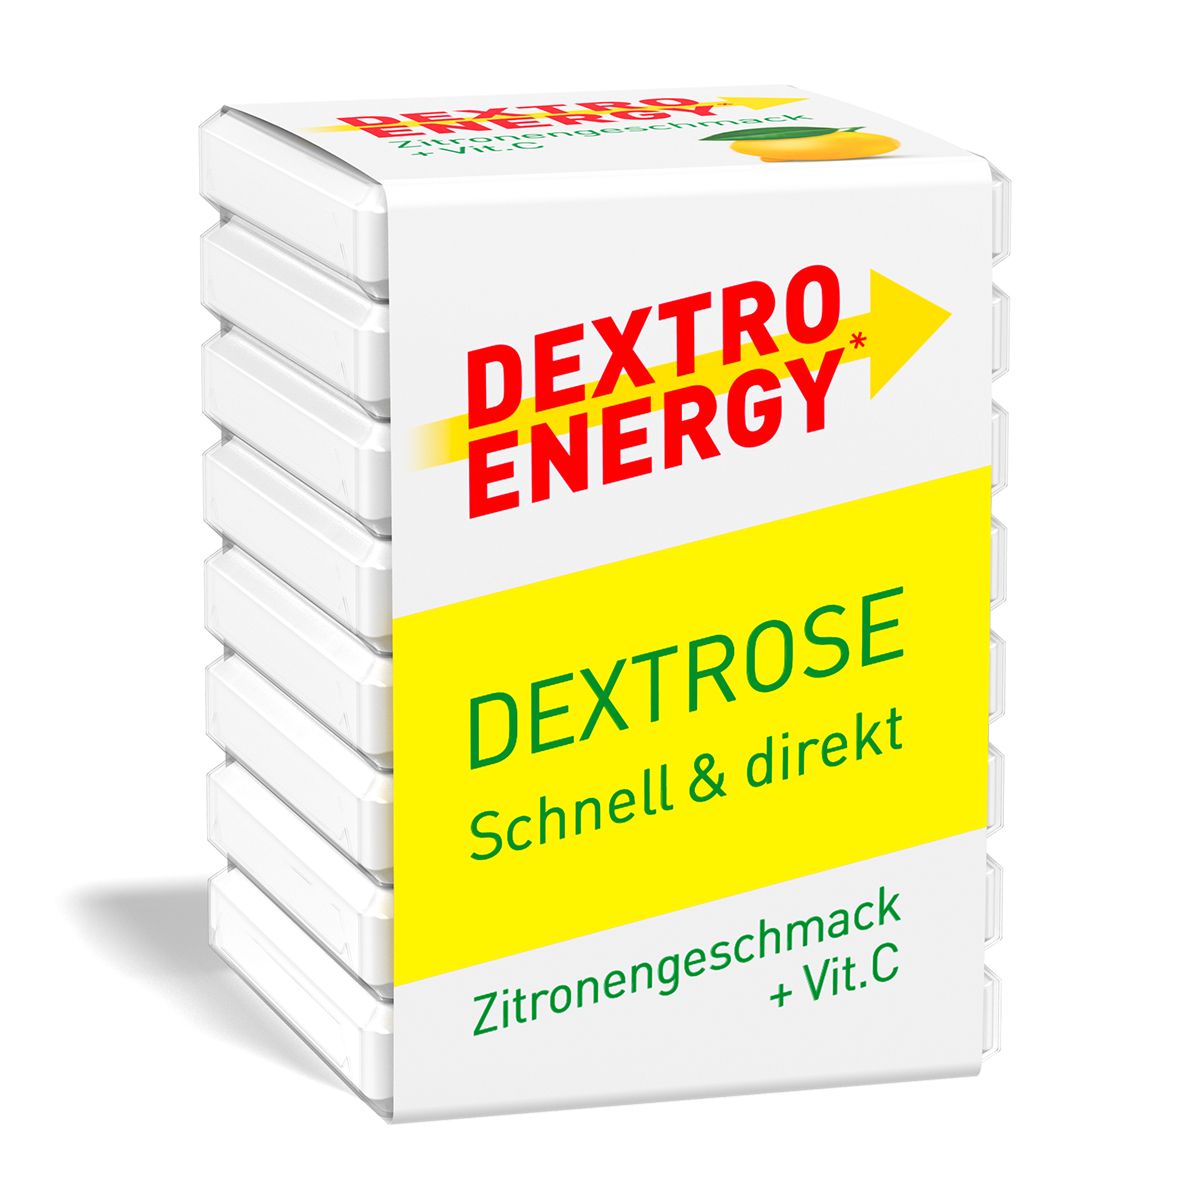 Dextro Energy Würfel Vitamin C Zitrone